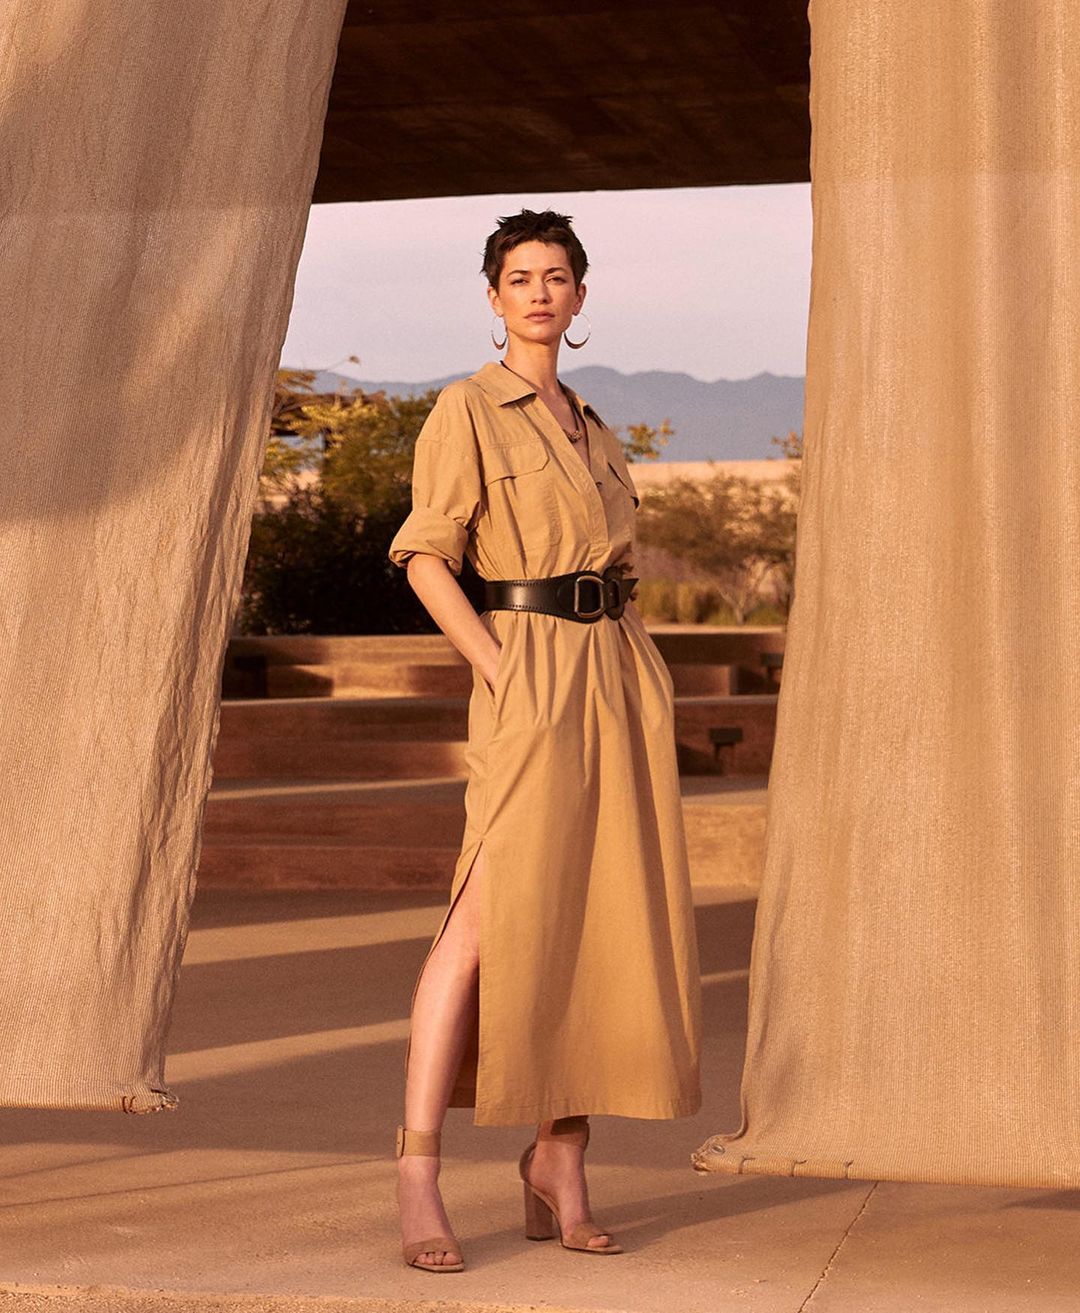 image of a woman in a desert setting wearing a khaki dress